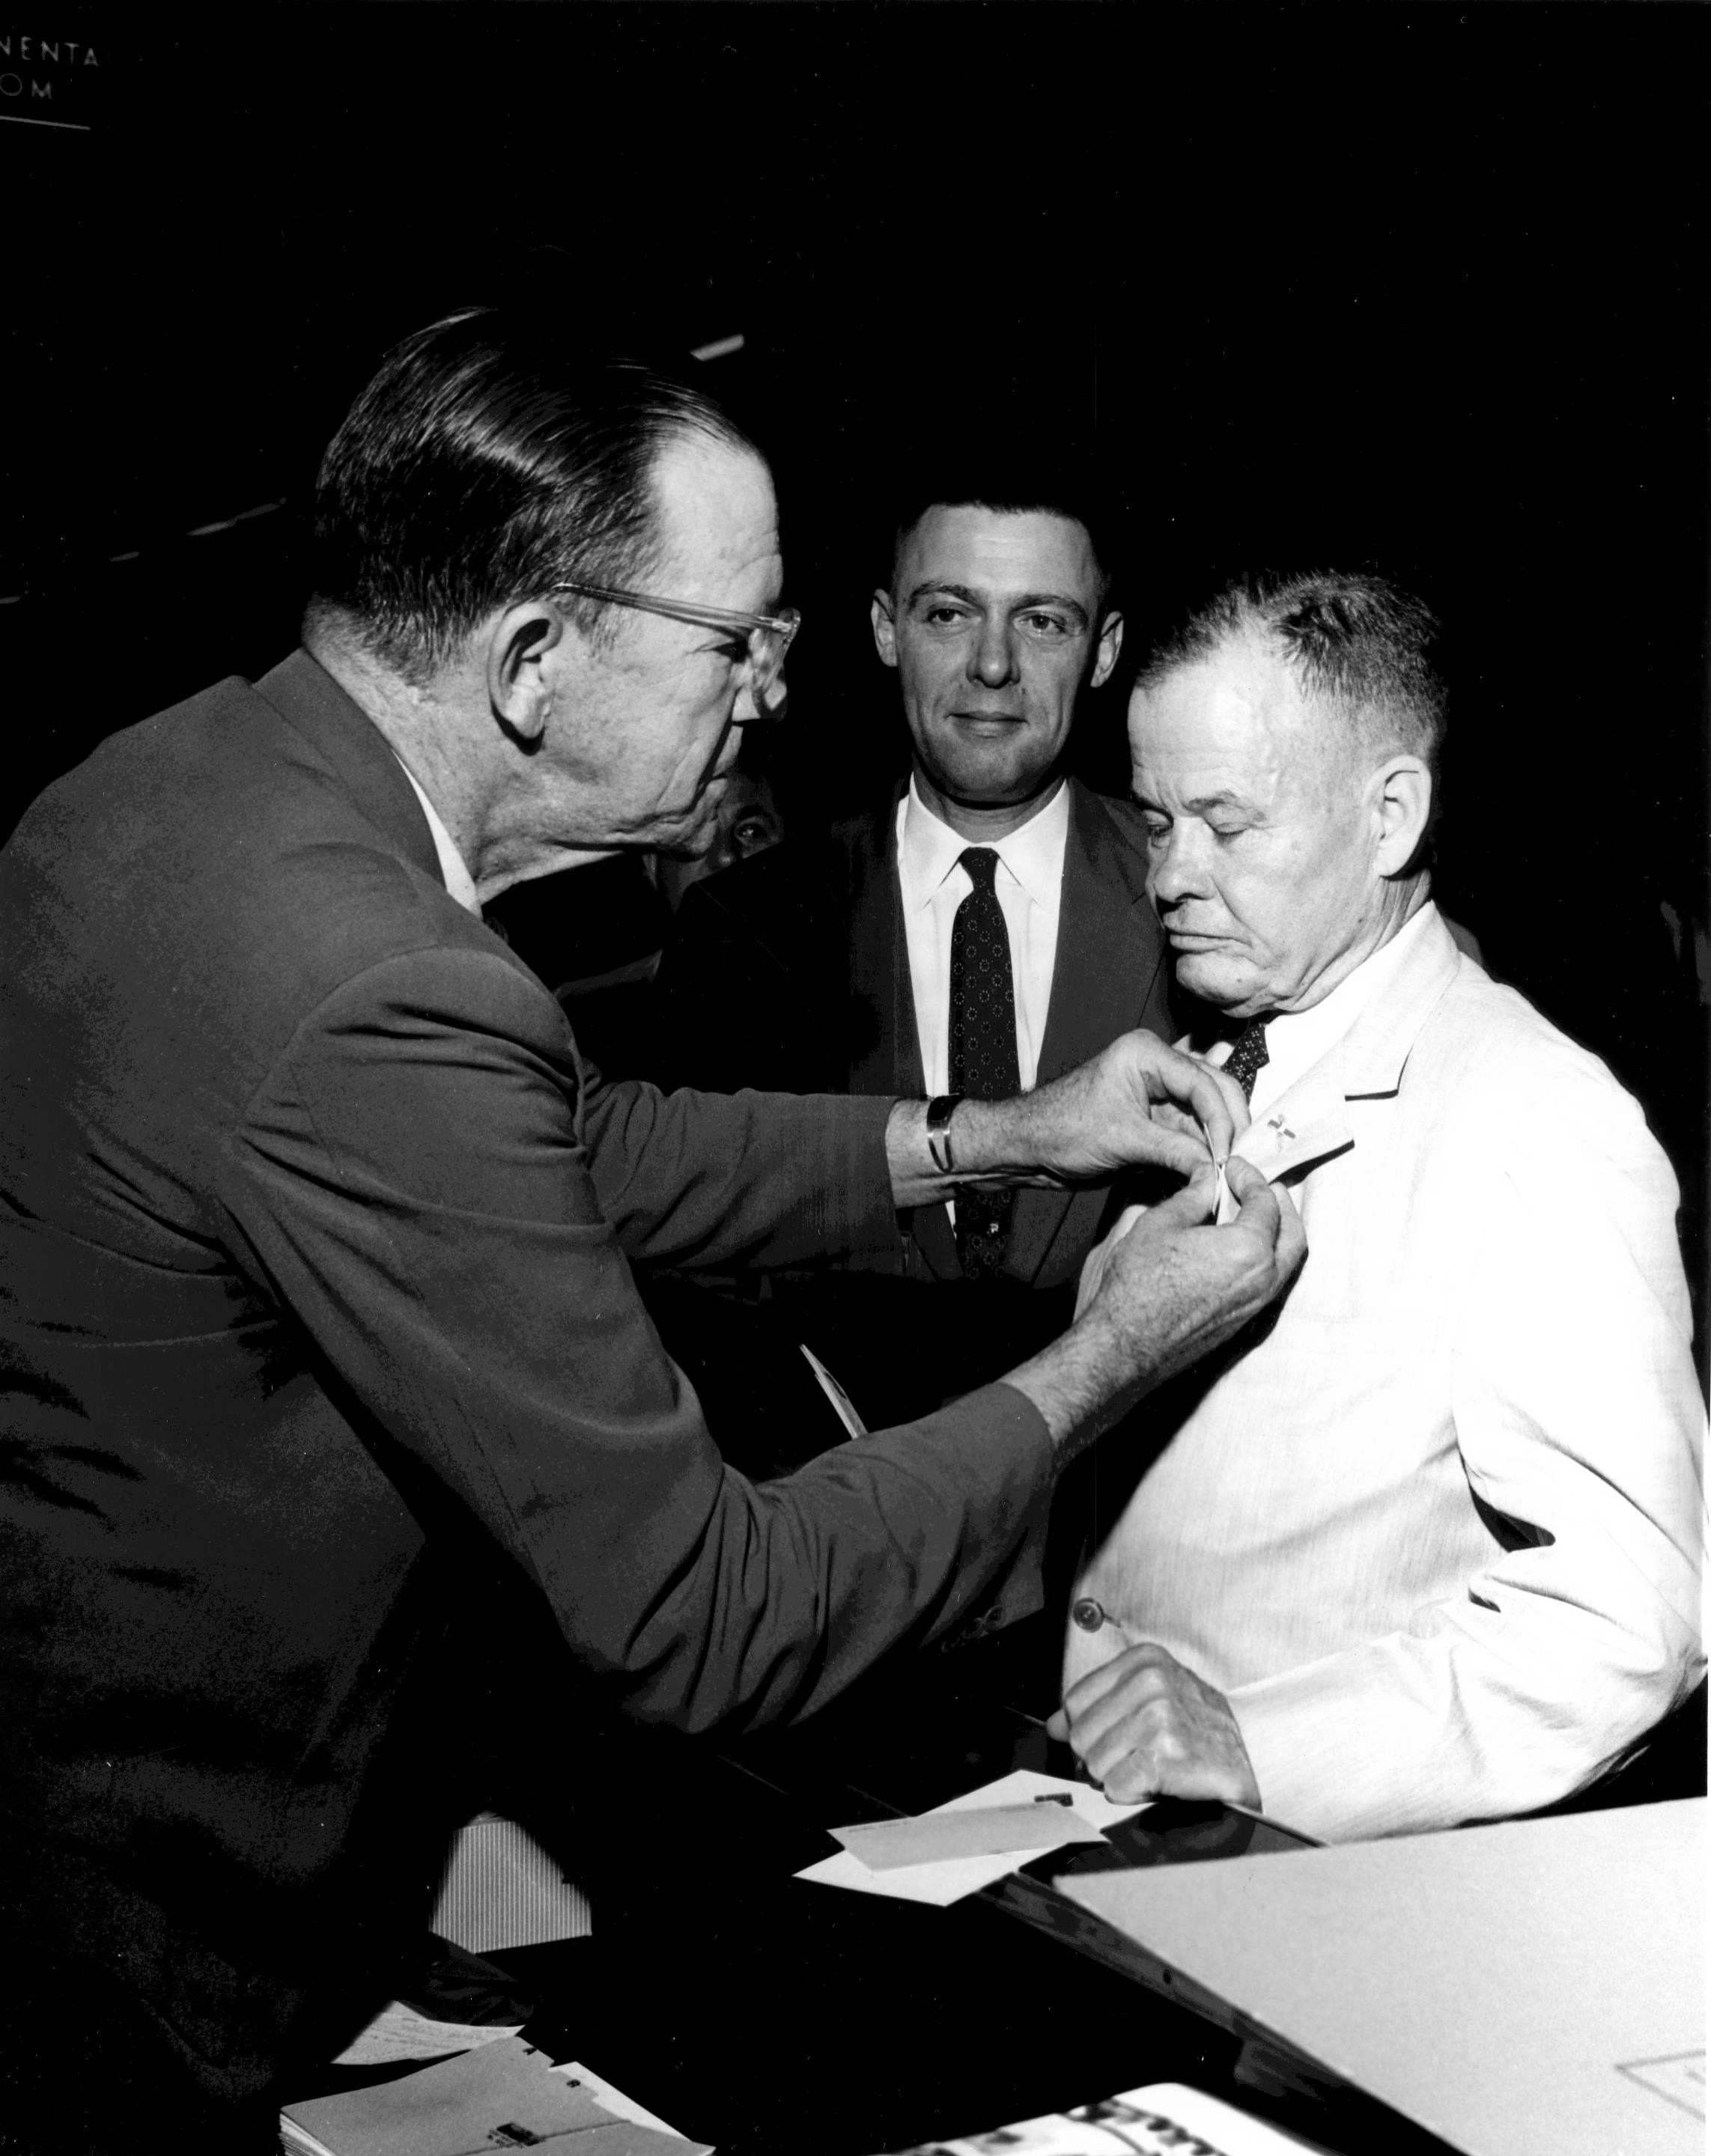 US 1st Marine Division Association Secretary-Treasurer Edwin Clarke pinning a membership card on Lieutenant General Lewis Puller, 26 Jun 1960; note Colonel Jonas Platt in background